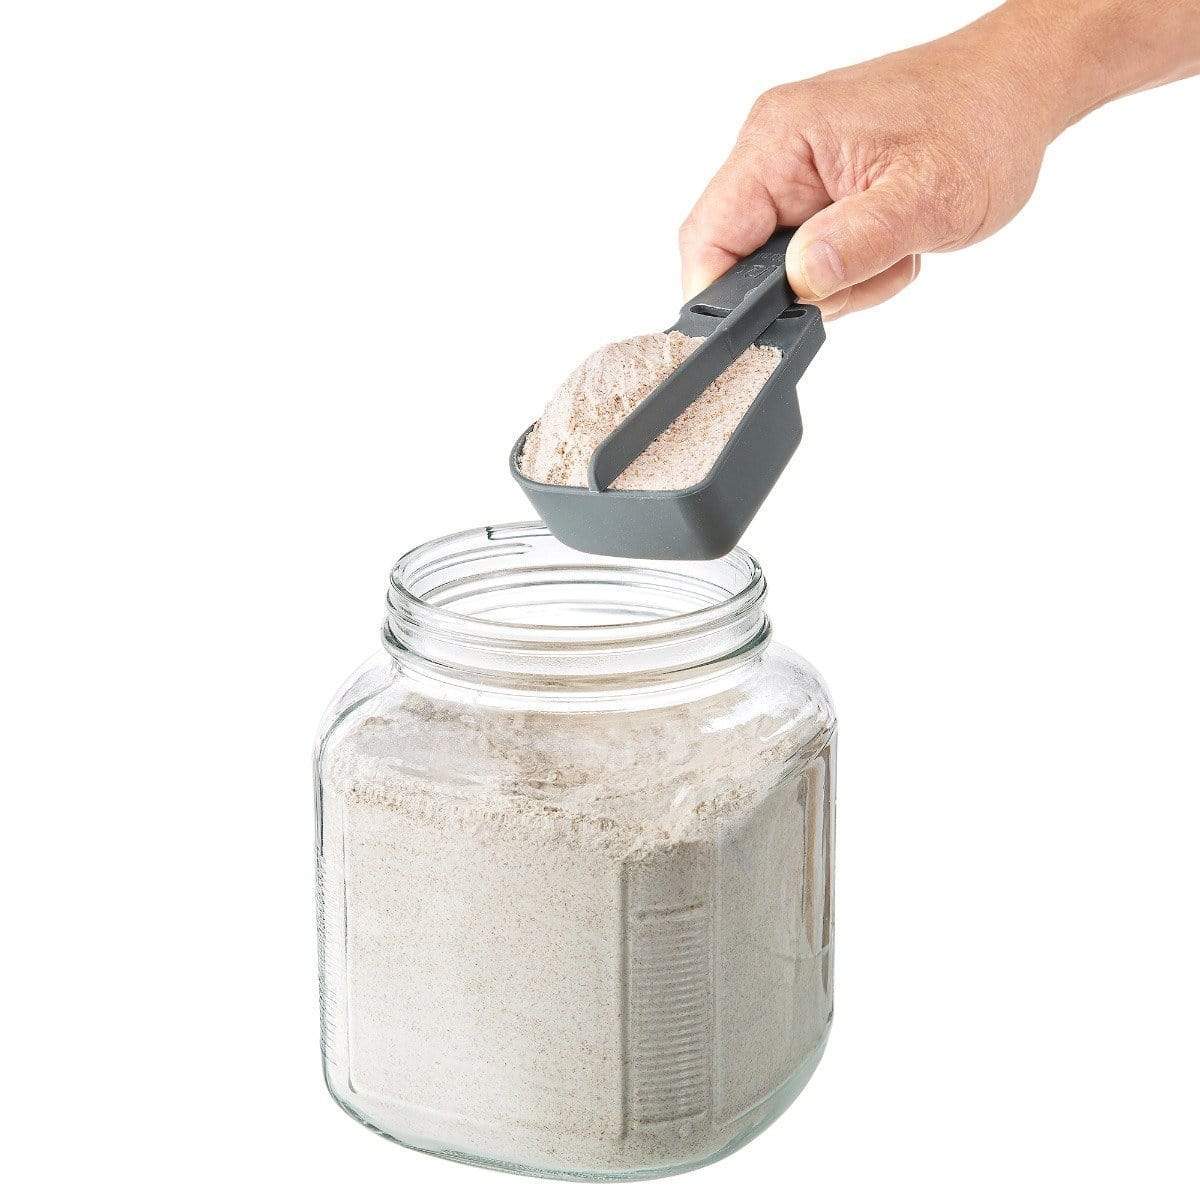 Measuring Salt and Pepper Shakers Precise Quantitative Ration